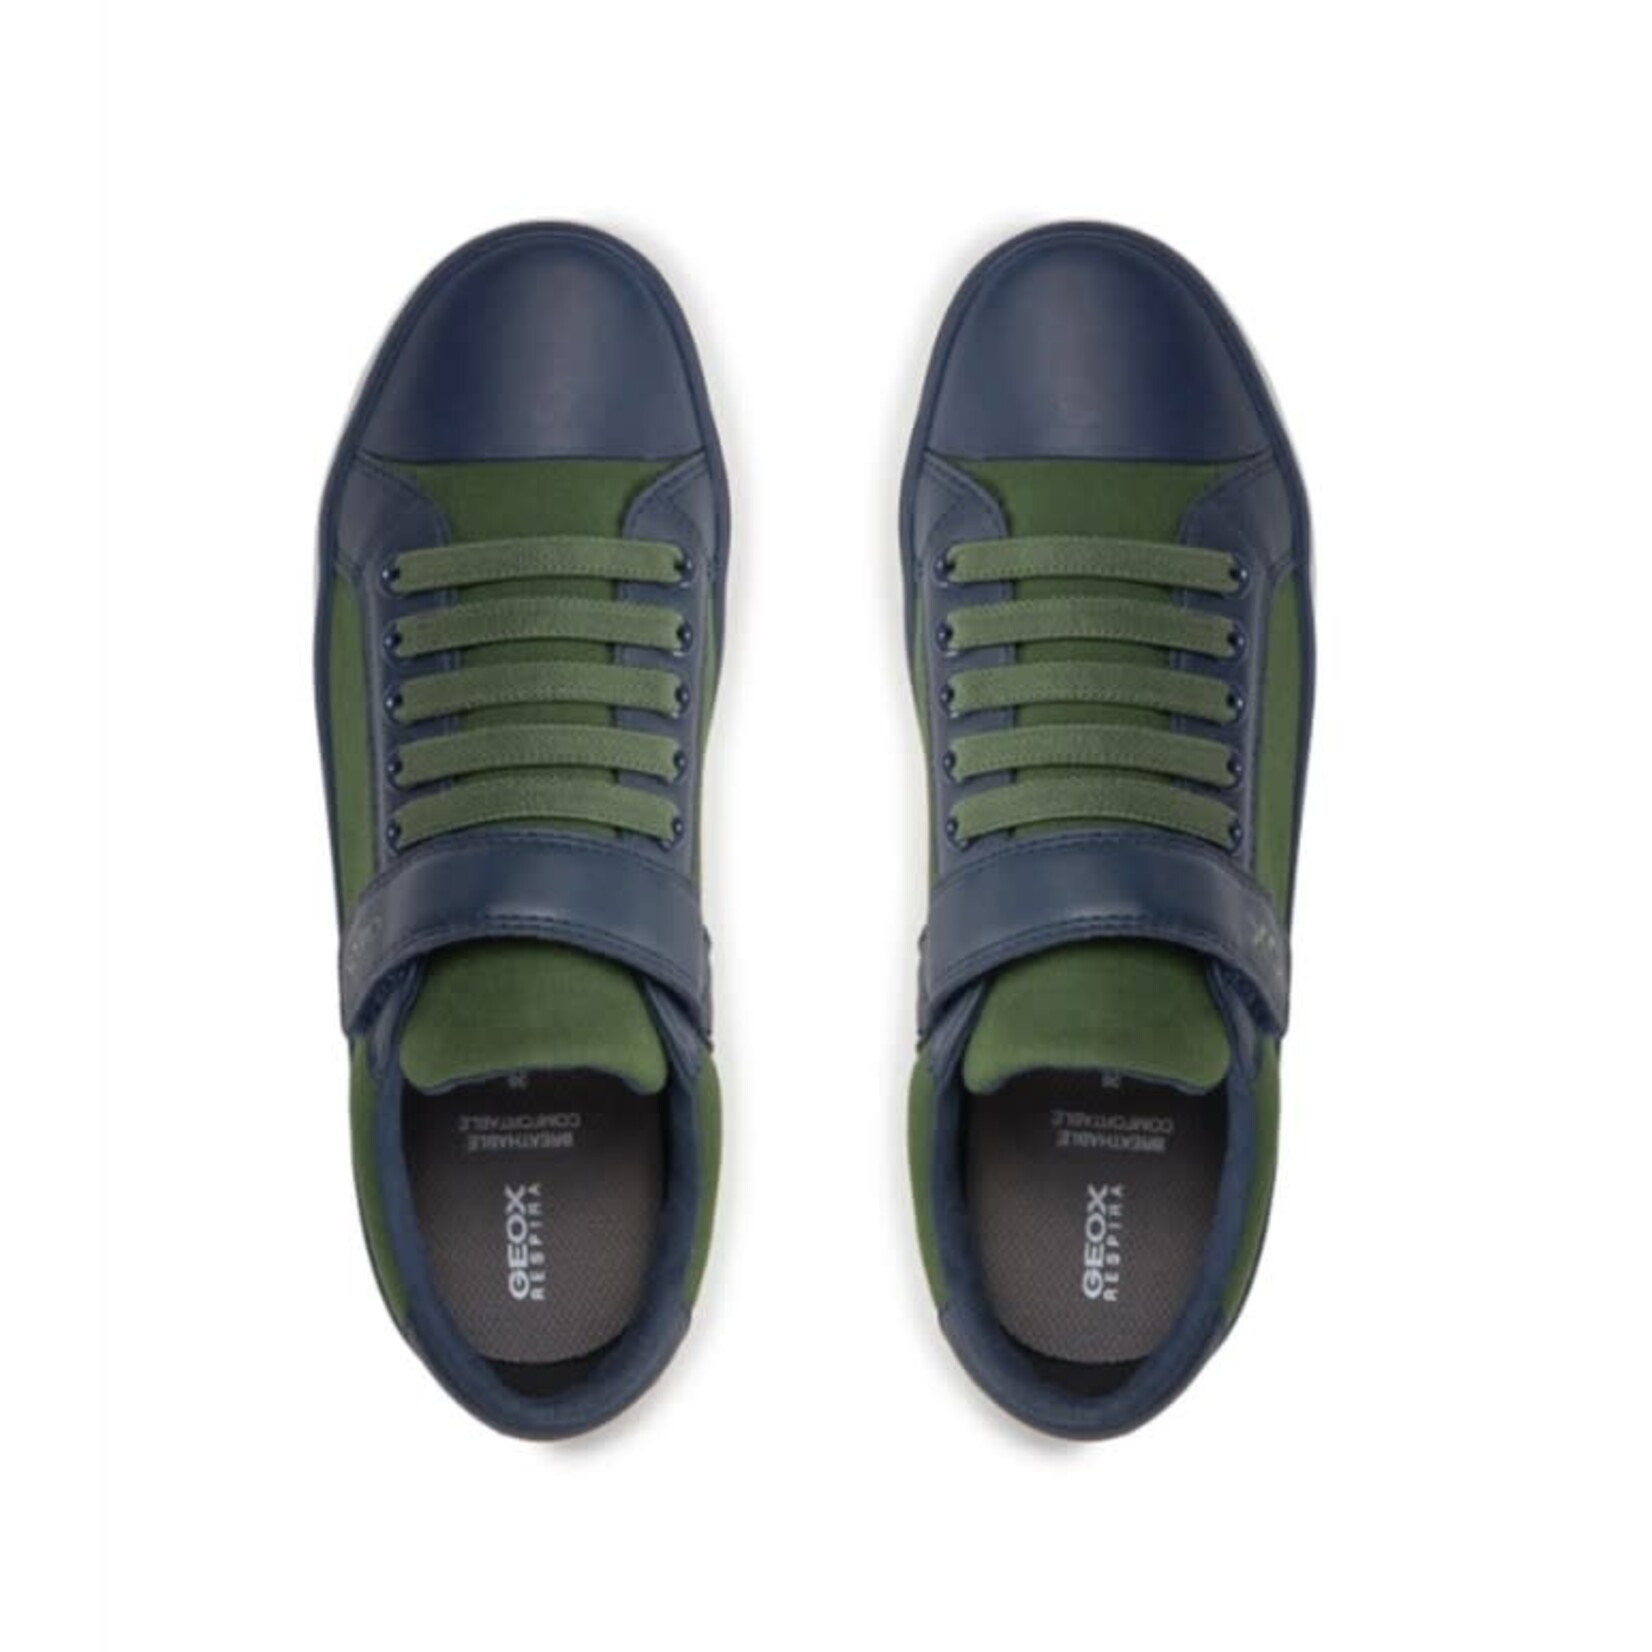 Geox GEOX - Chaussures vertes de toile et cuir synthétique 'Gisli - Marine/Vert'